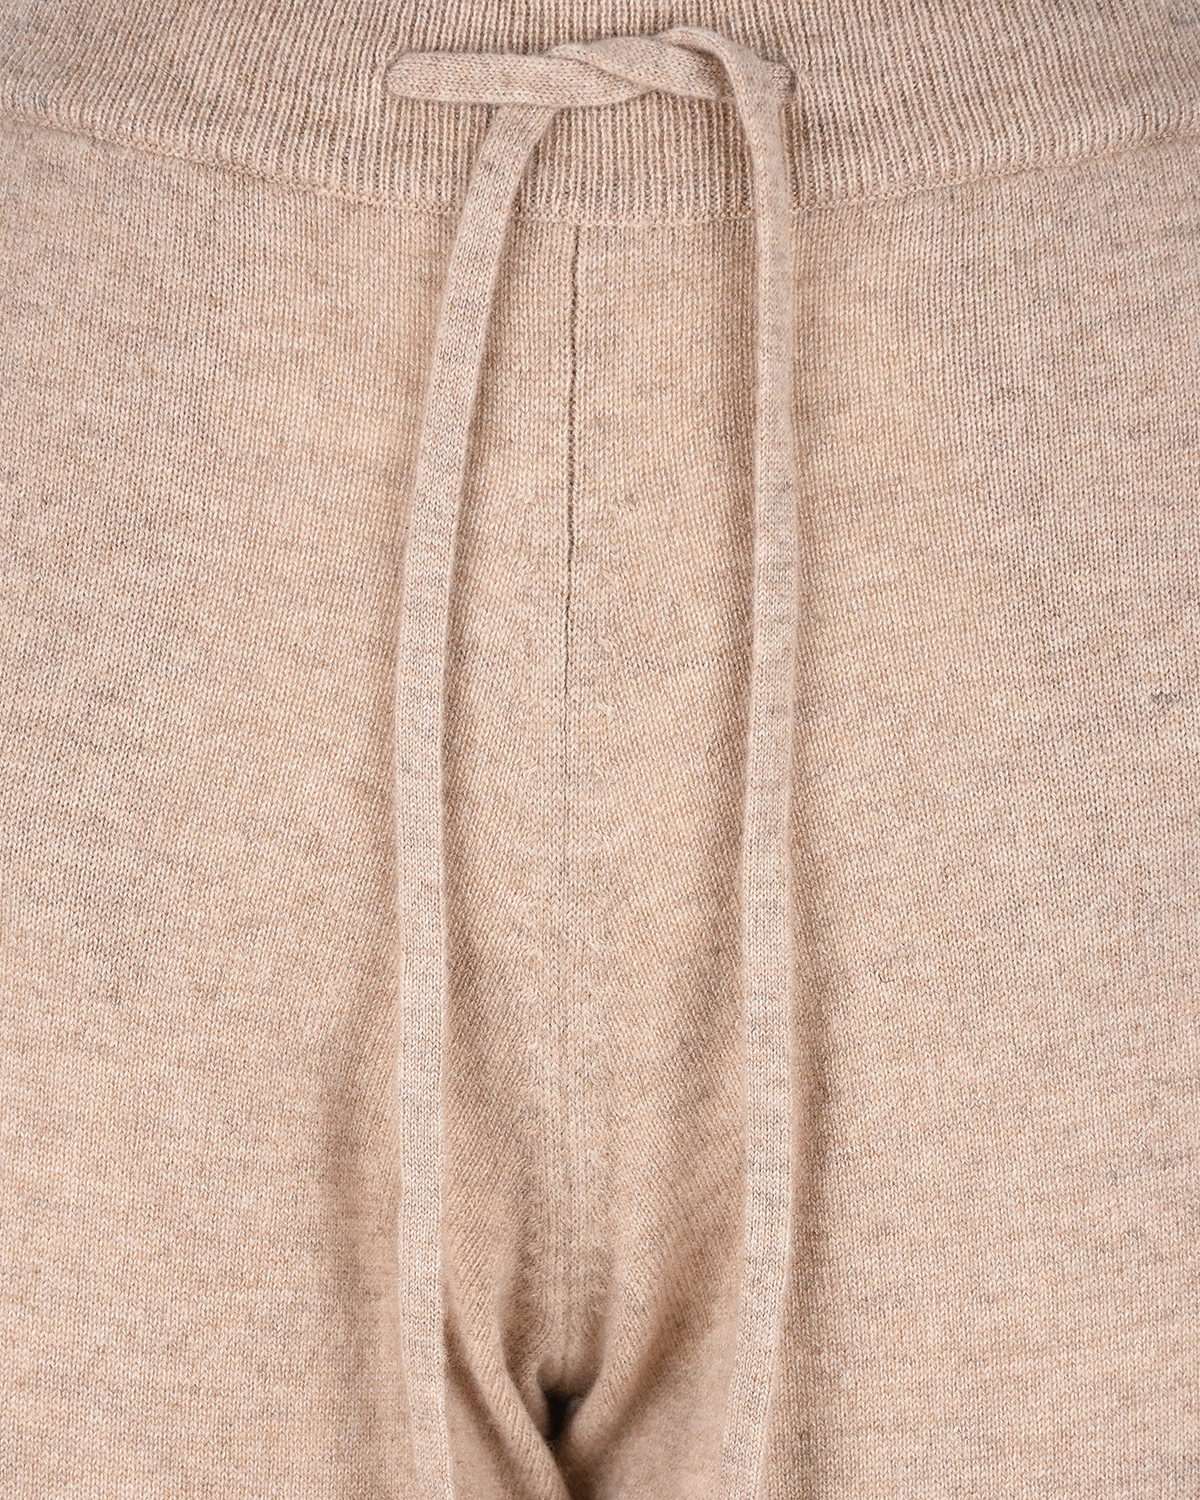 Бежевые брюки с поясом на кулиске Chinti&Parker, размер 38, цвет бежевый - фото 9